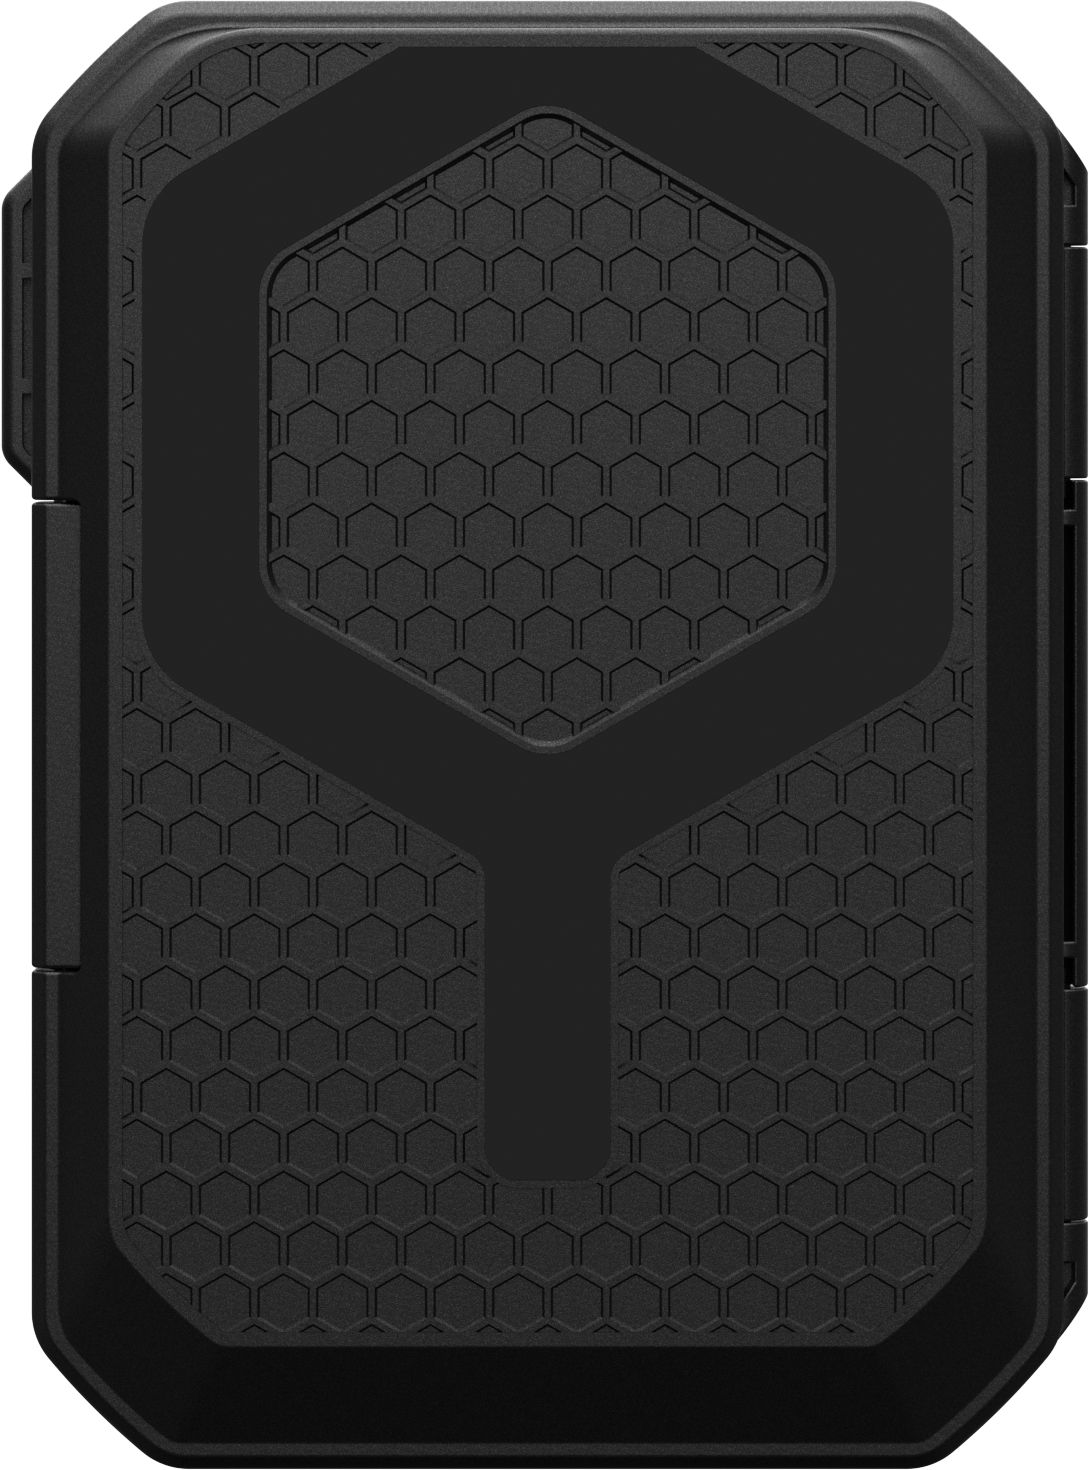 Чехол для карт UAG Magnetic Wallet with Stand, Black (964442114040)фото4